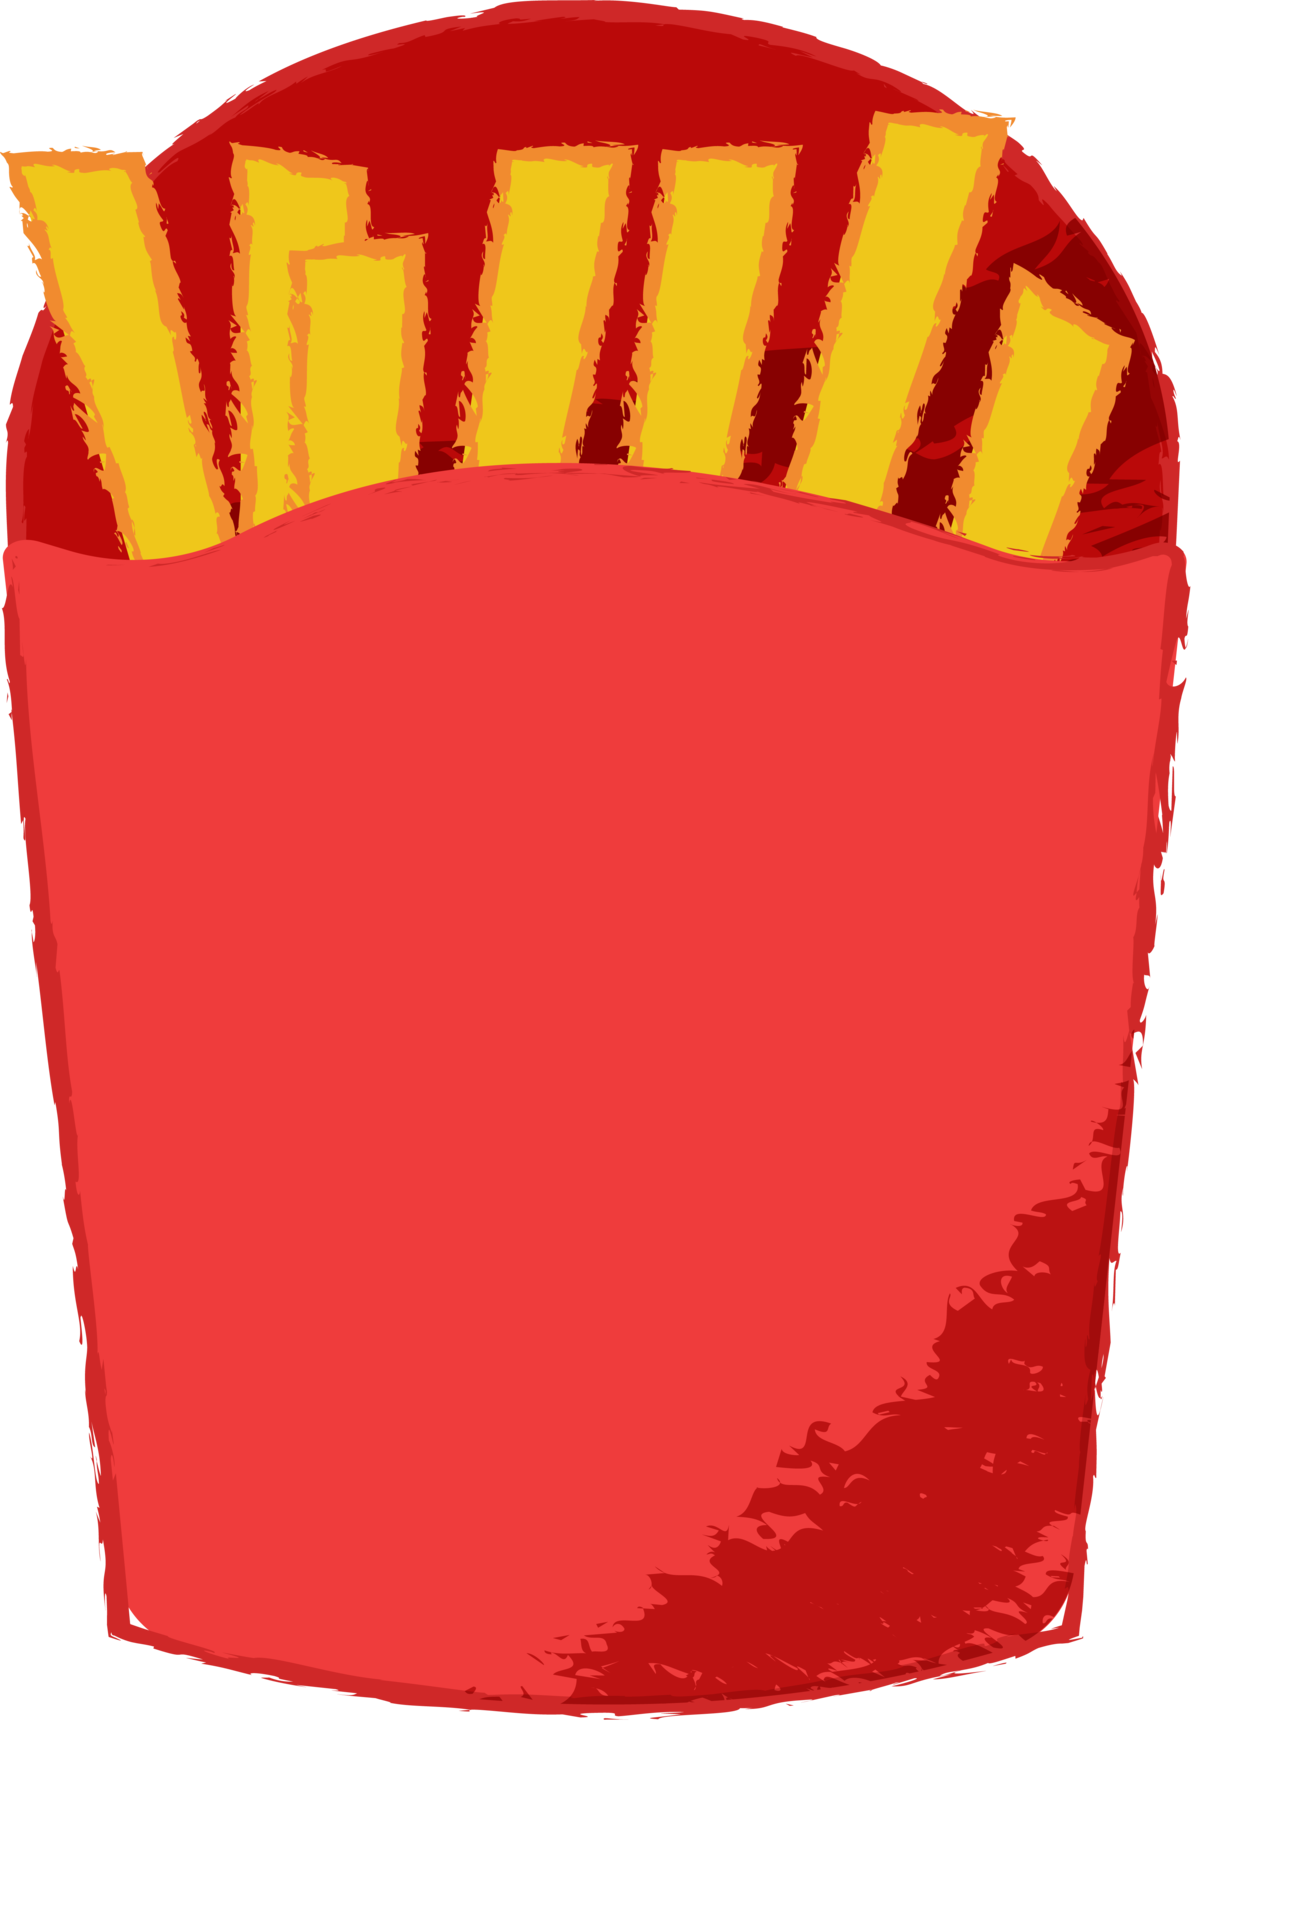 File:French fries box.jpg - Wikipedia